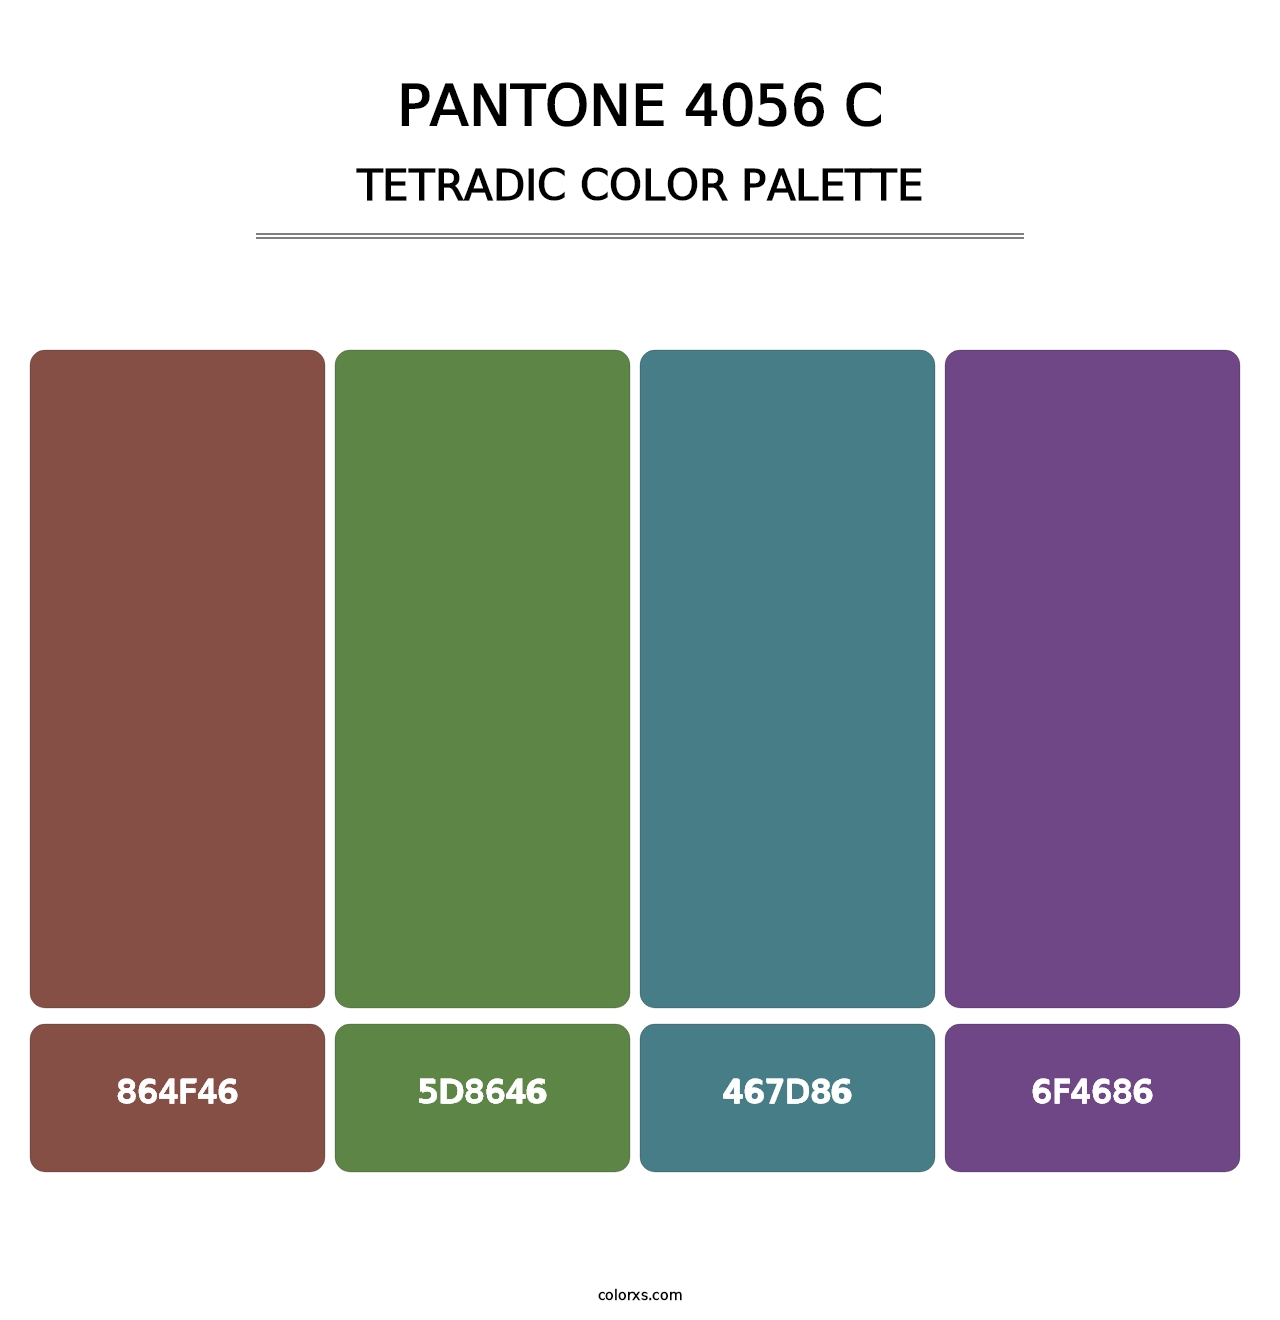 PANTONE 4056 C - Tetradic Color Palette